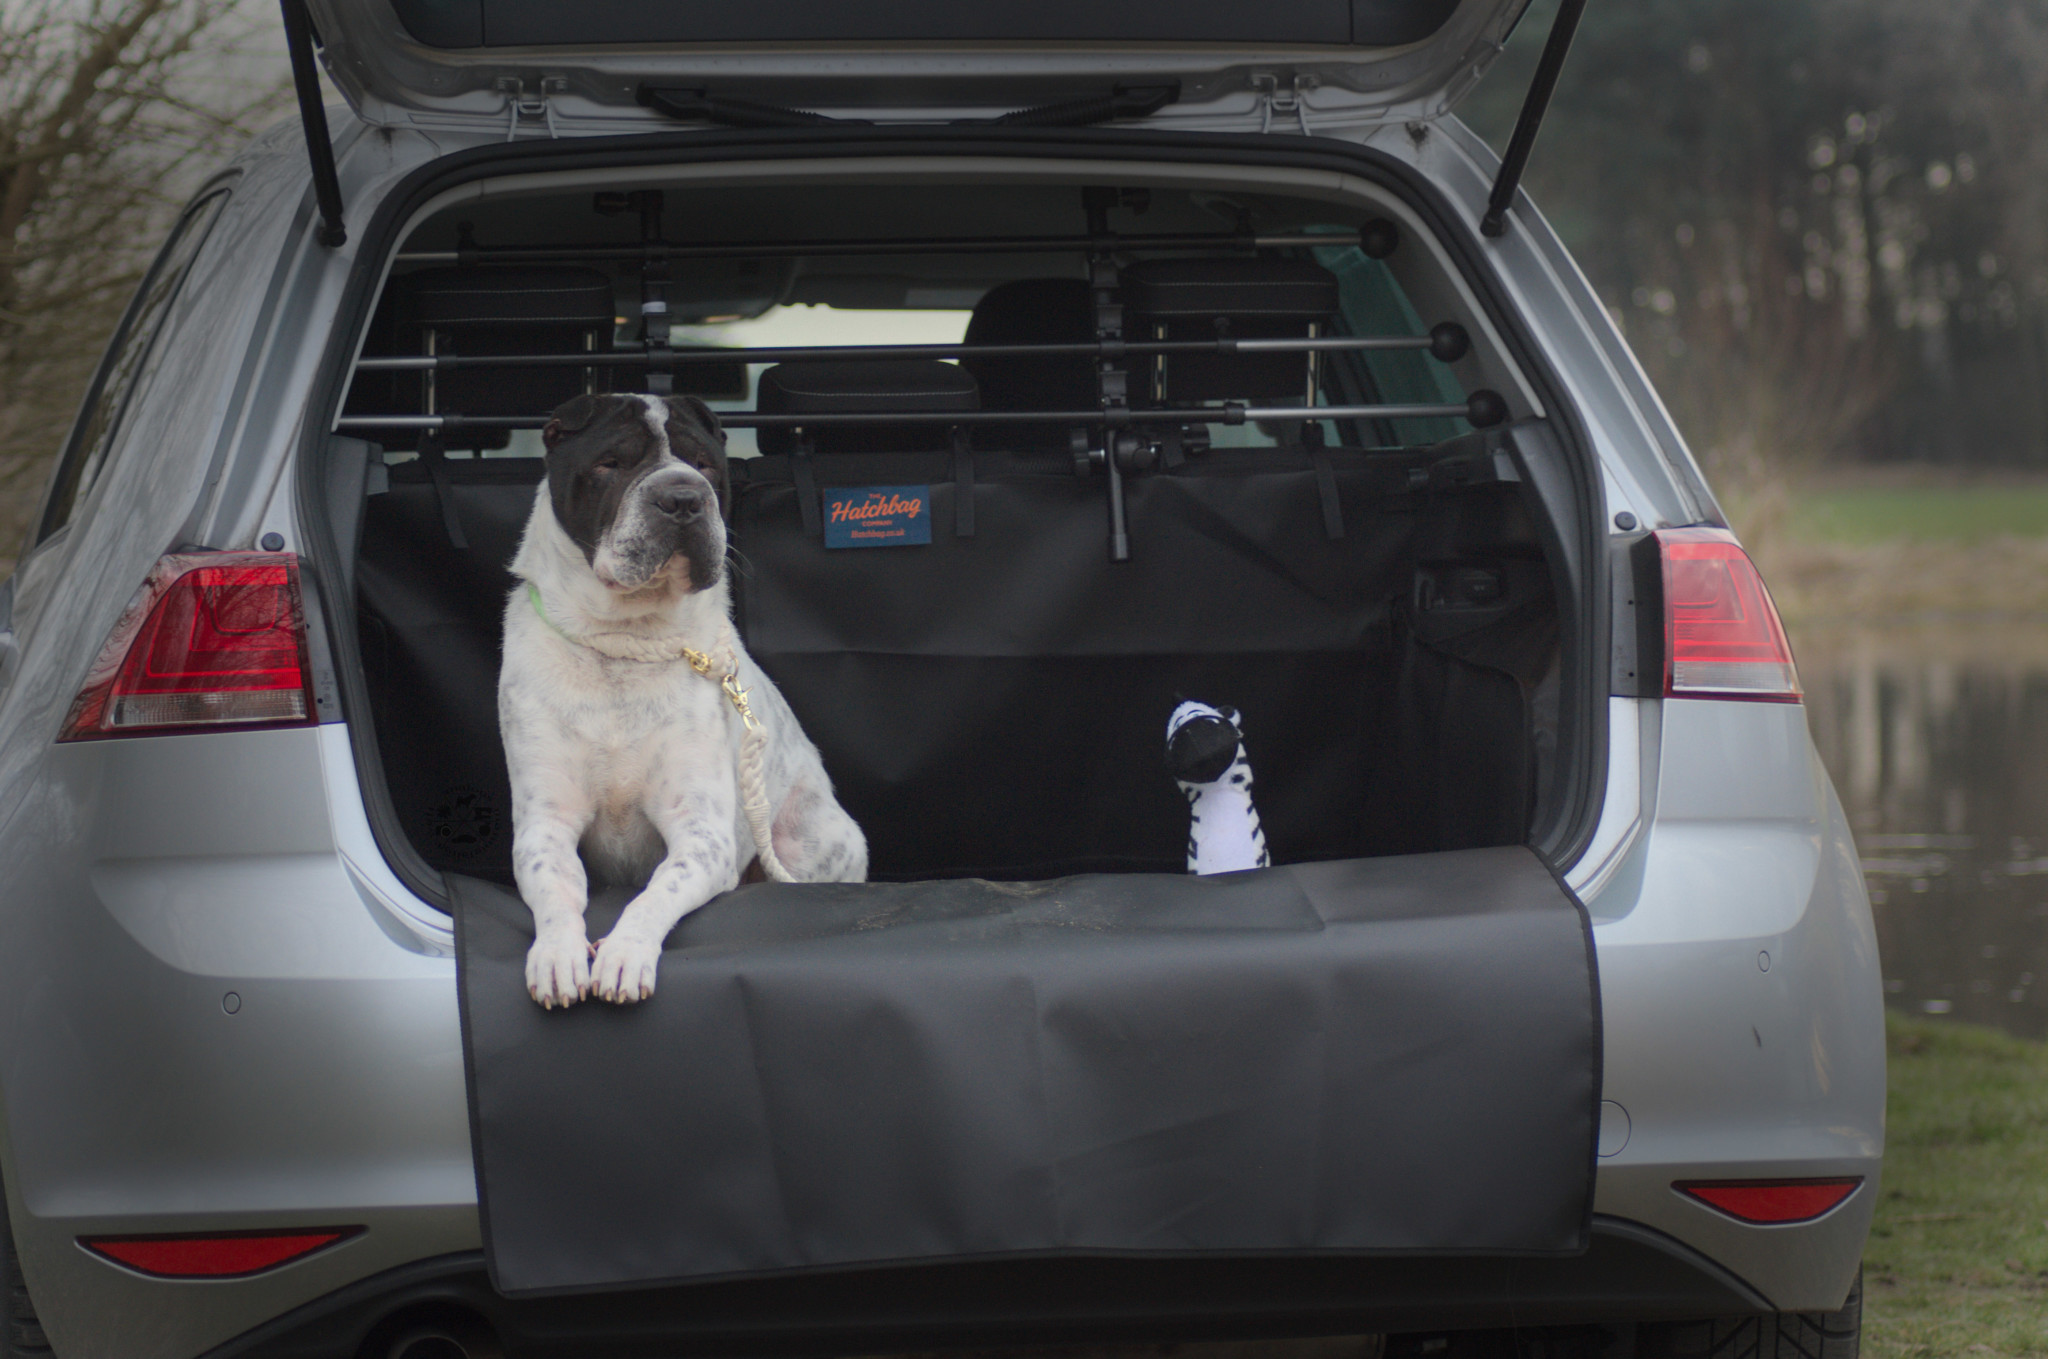 Test Hund Hundeblog Shar Pei Kingston Malous Rabaukenbande Tiere Tierblog Kofferraum lining Schmutz car Auto Golf VW